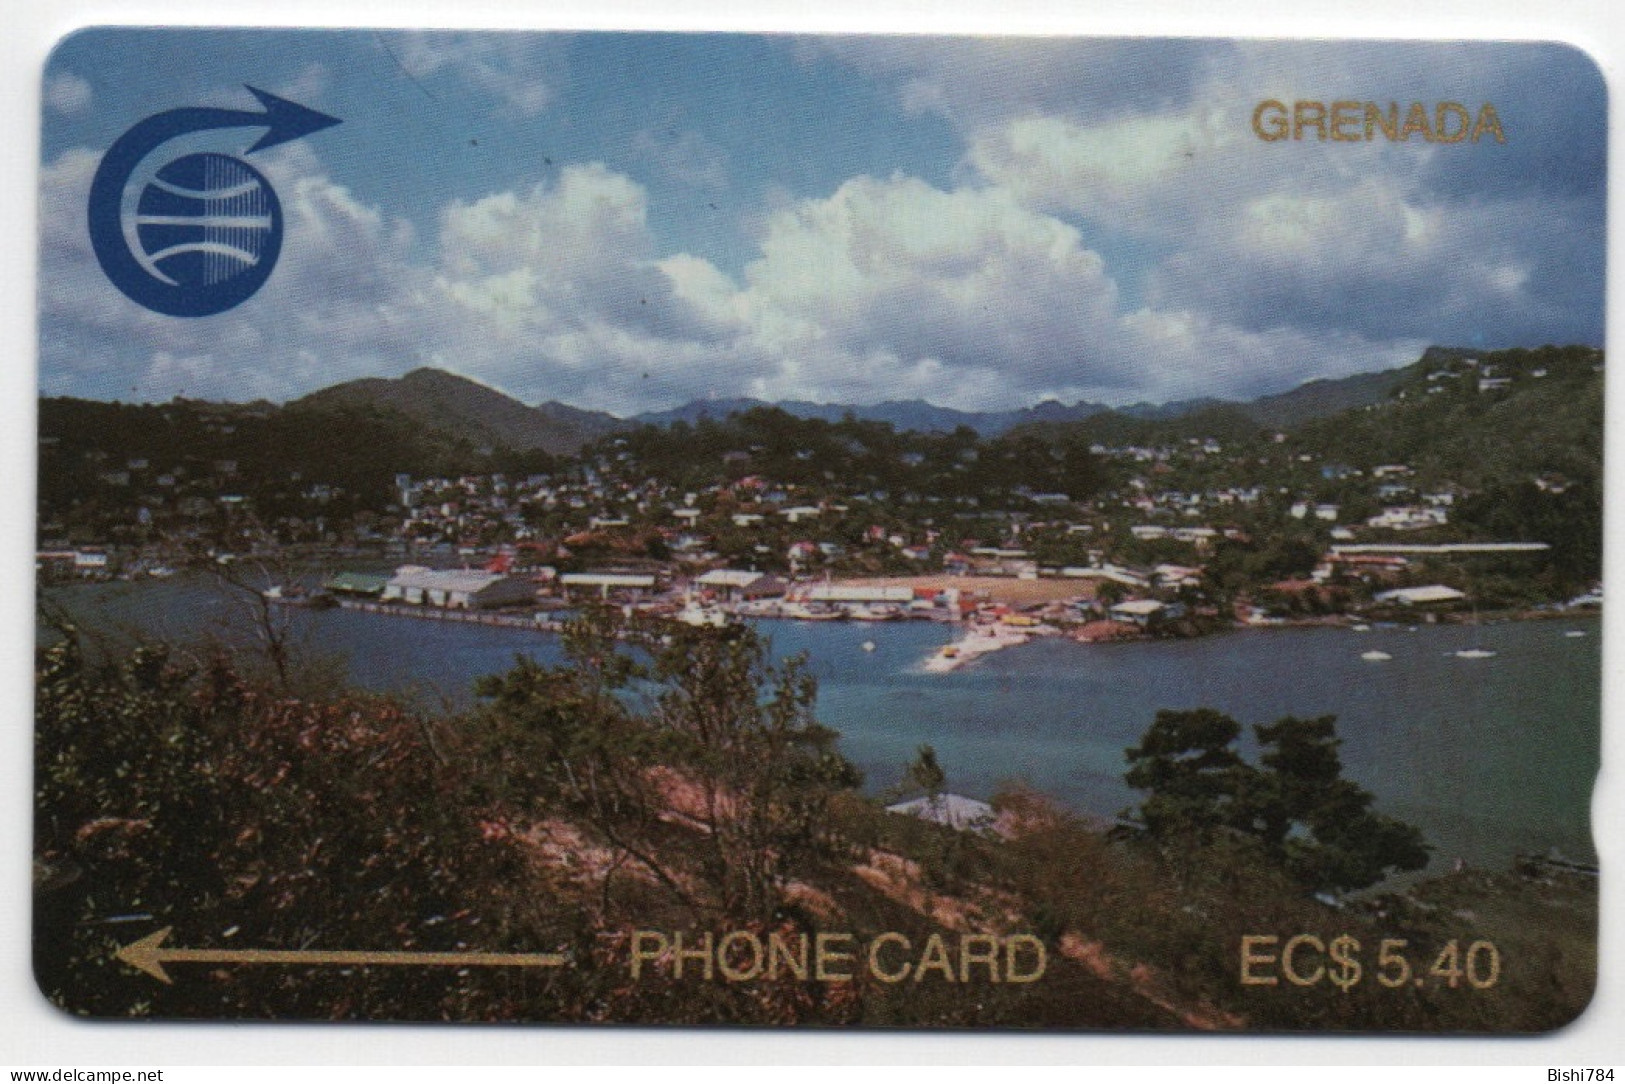 Grenada - View Of St. George’s $5.40 (Windward Island Pack) - 2CGRA - Granada